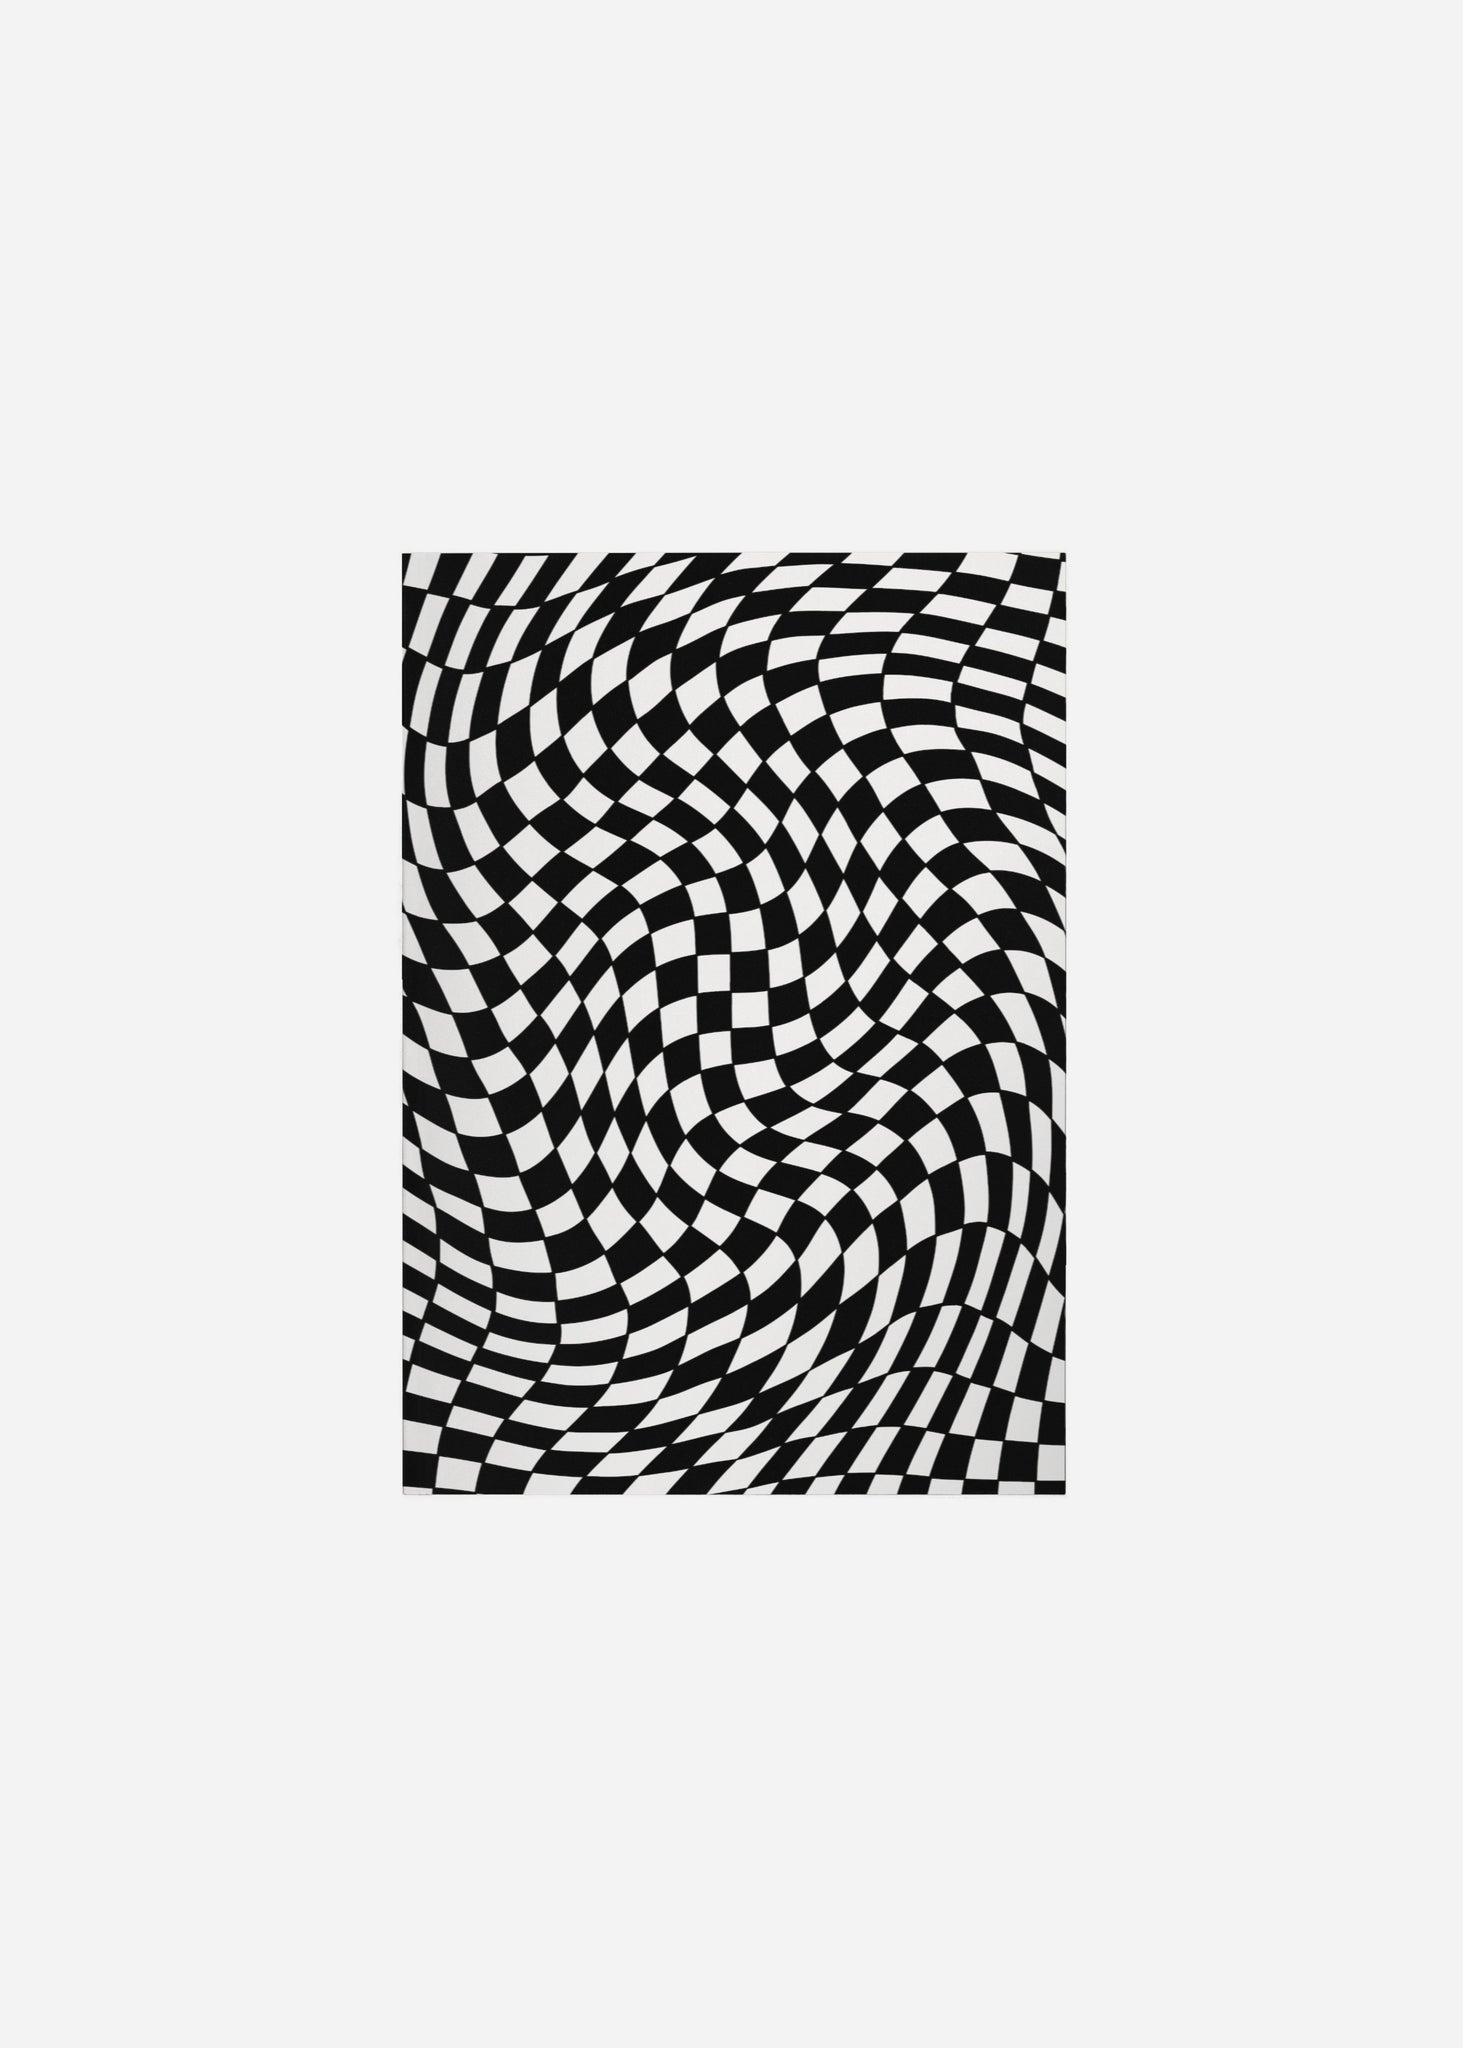 Wavy Checkers Fine Art Print